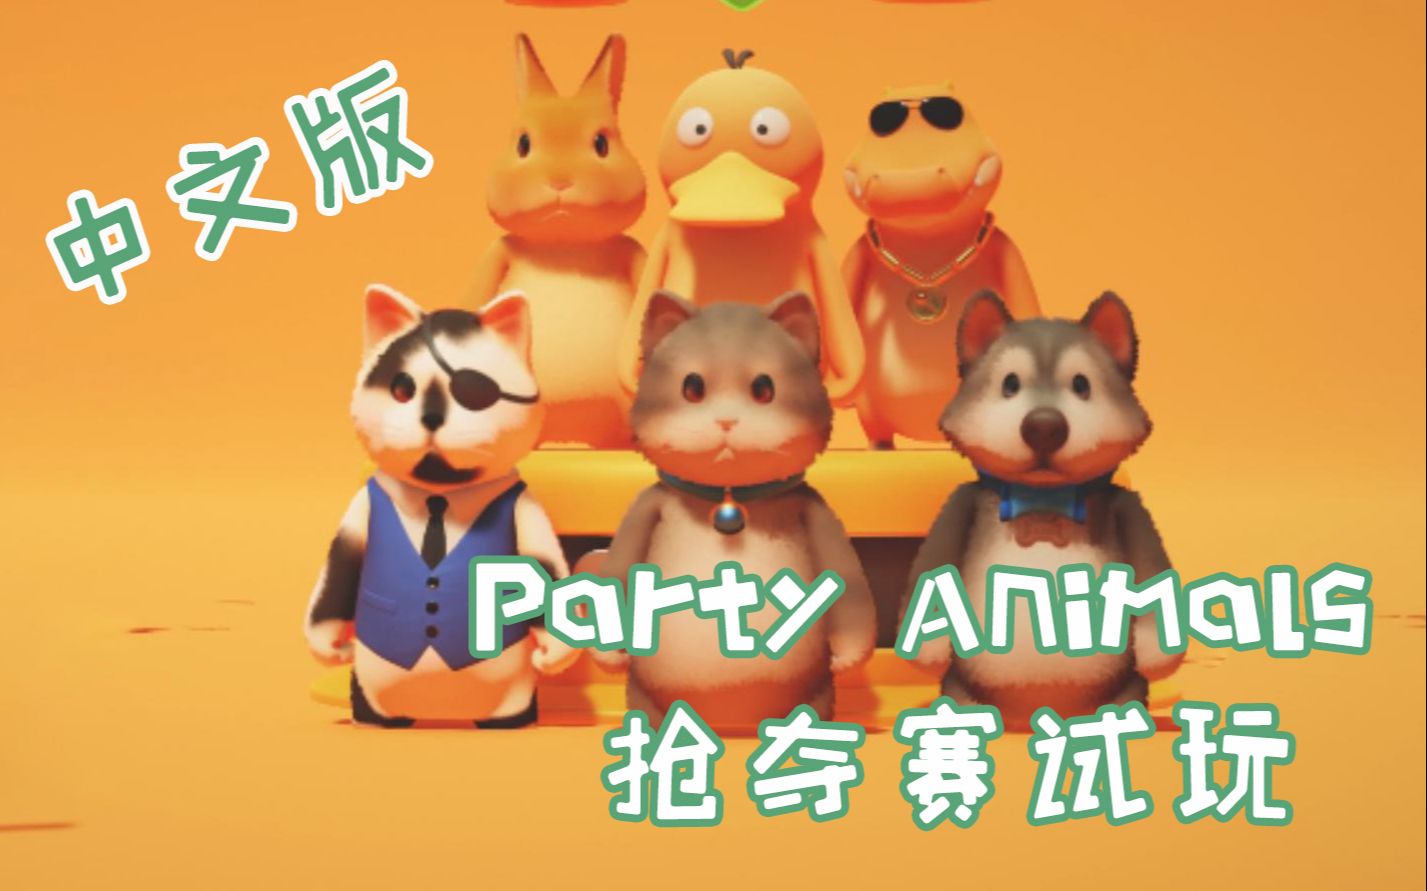 partyanimals动物派对中文版抢夺赛试玩